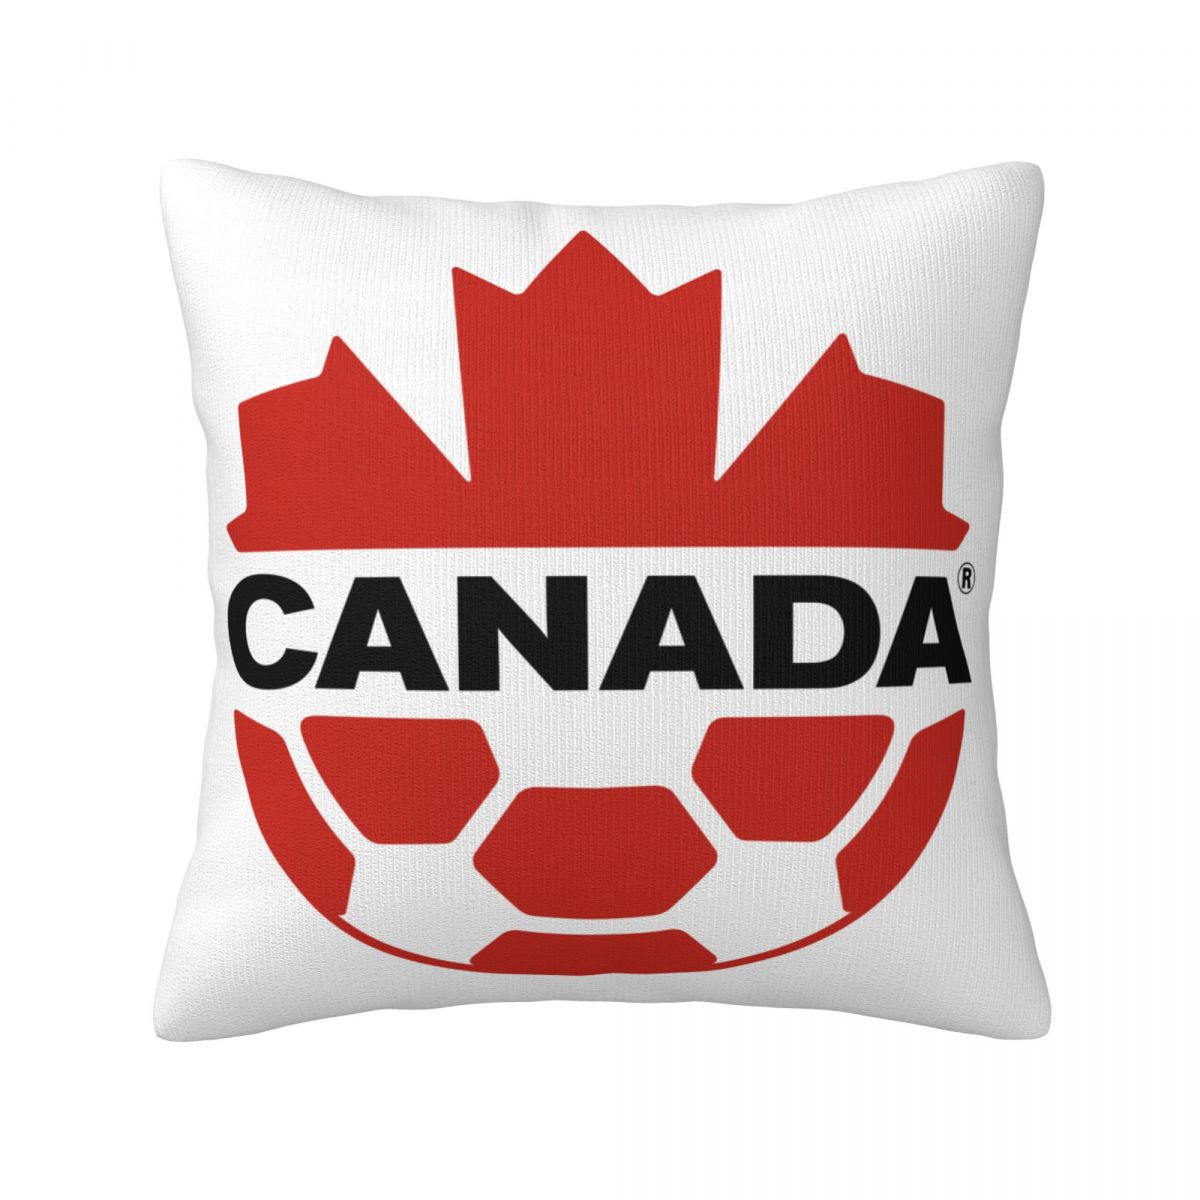 Canada National Football Team Decorative Throw Pillow